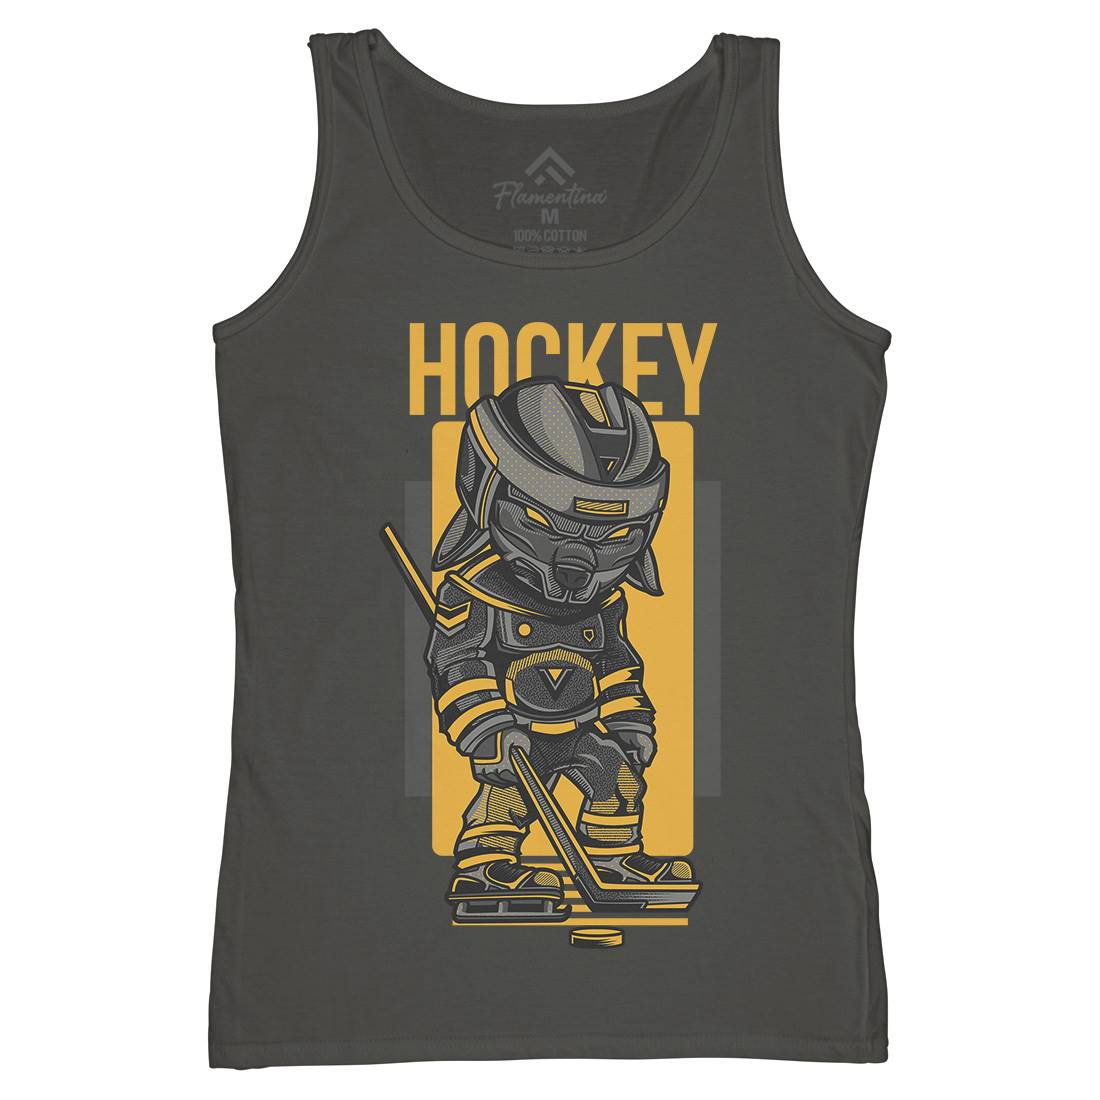 Hockey Womens Organic Tank Top Vest Sport D614